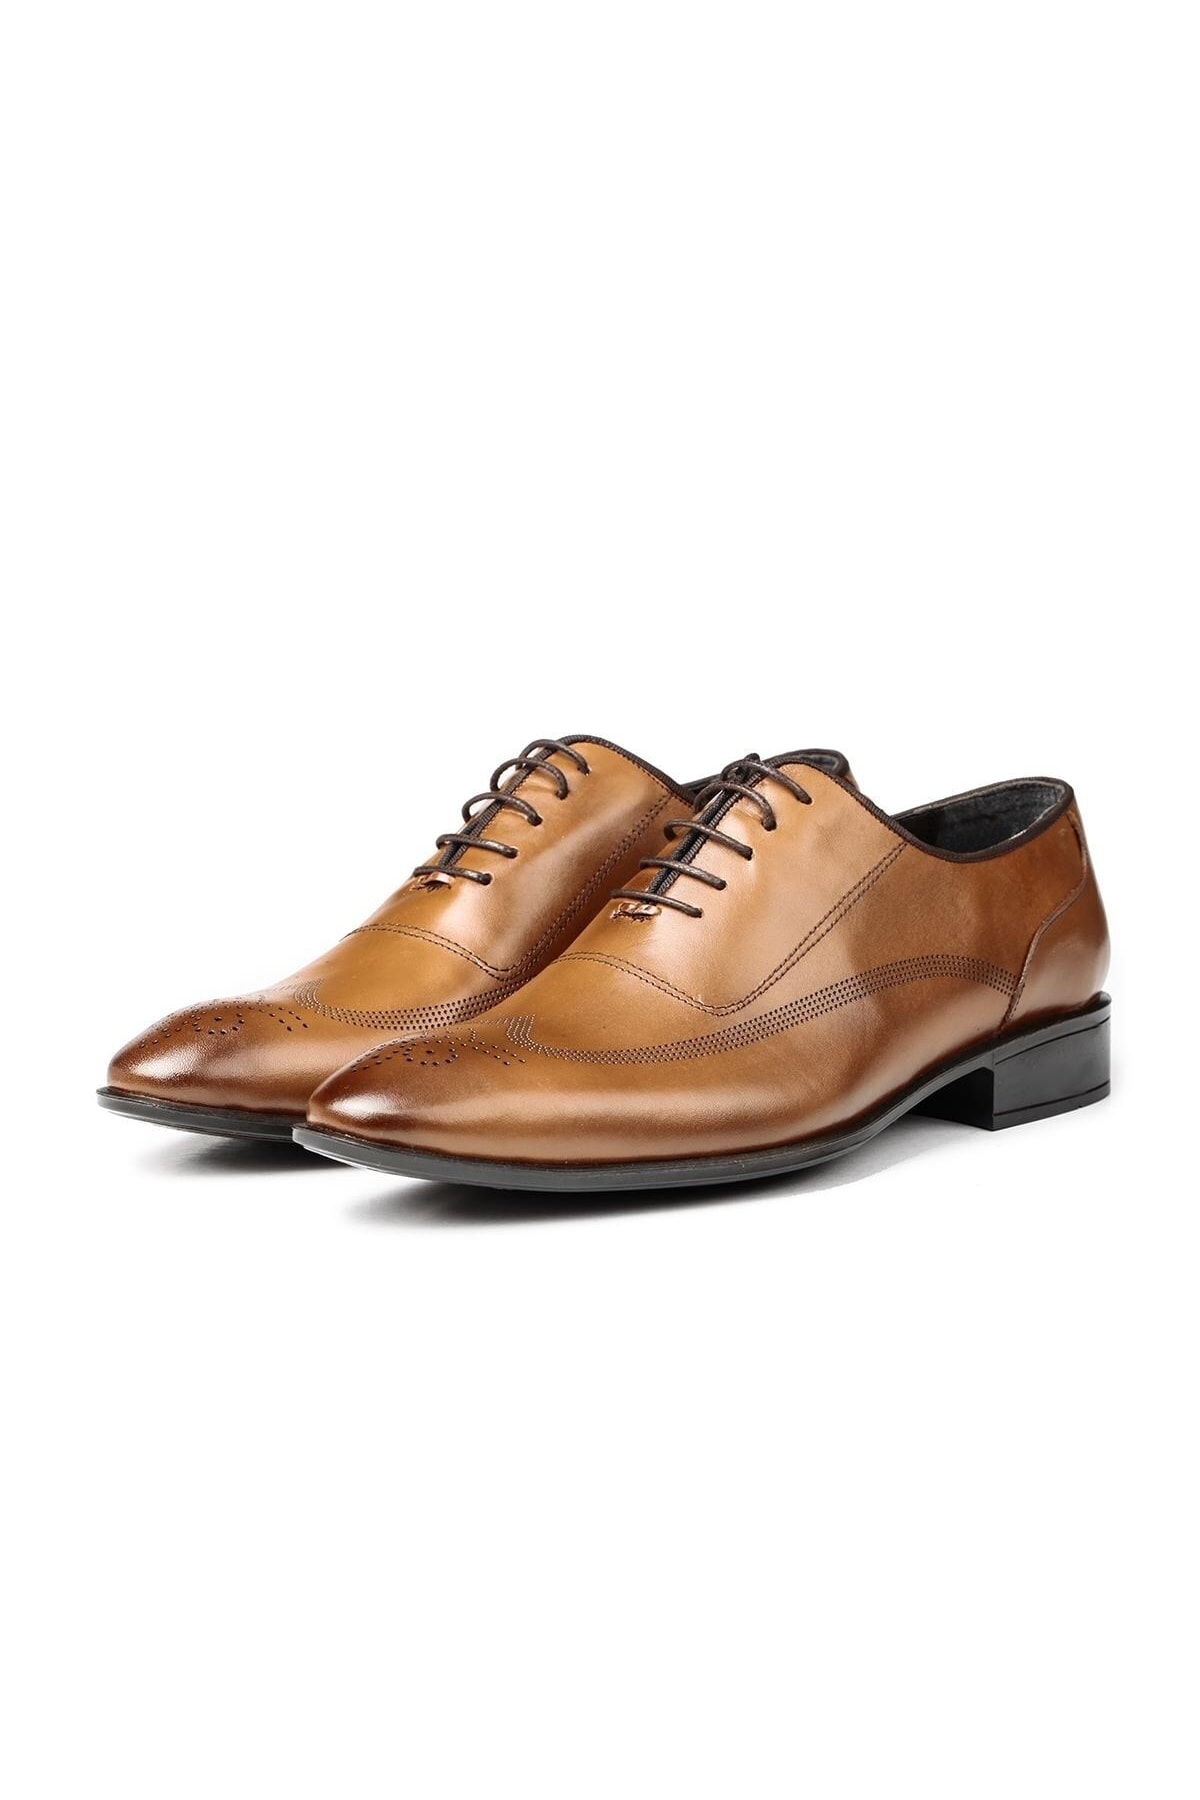 Levně Ducavelli Stylish Genuine Leather Men's Oxford Lace-Up Classic Shoe.